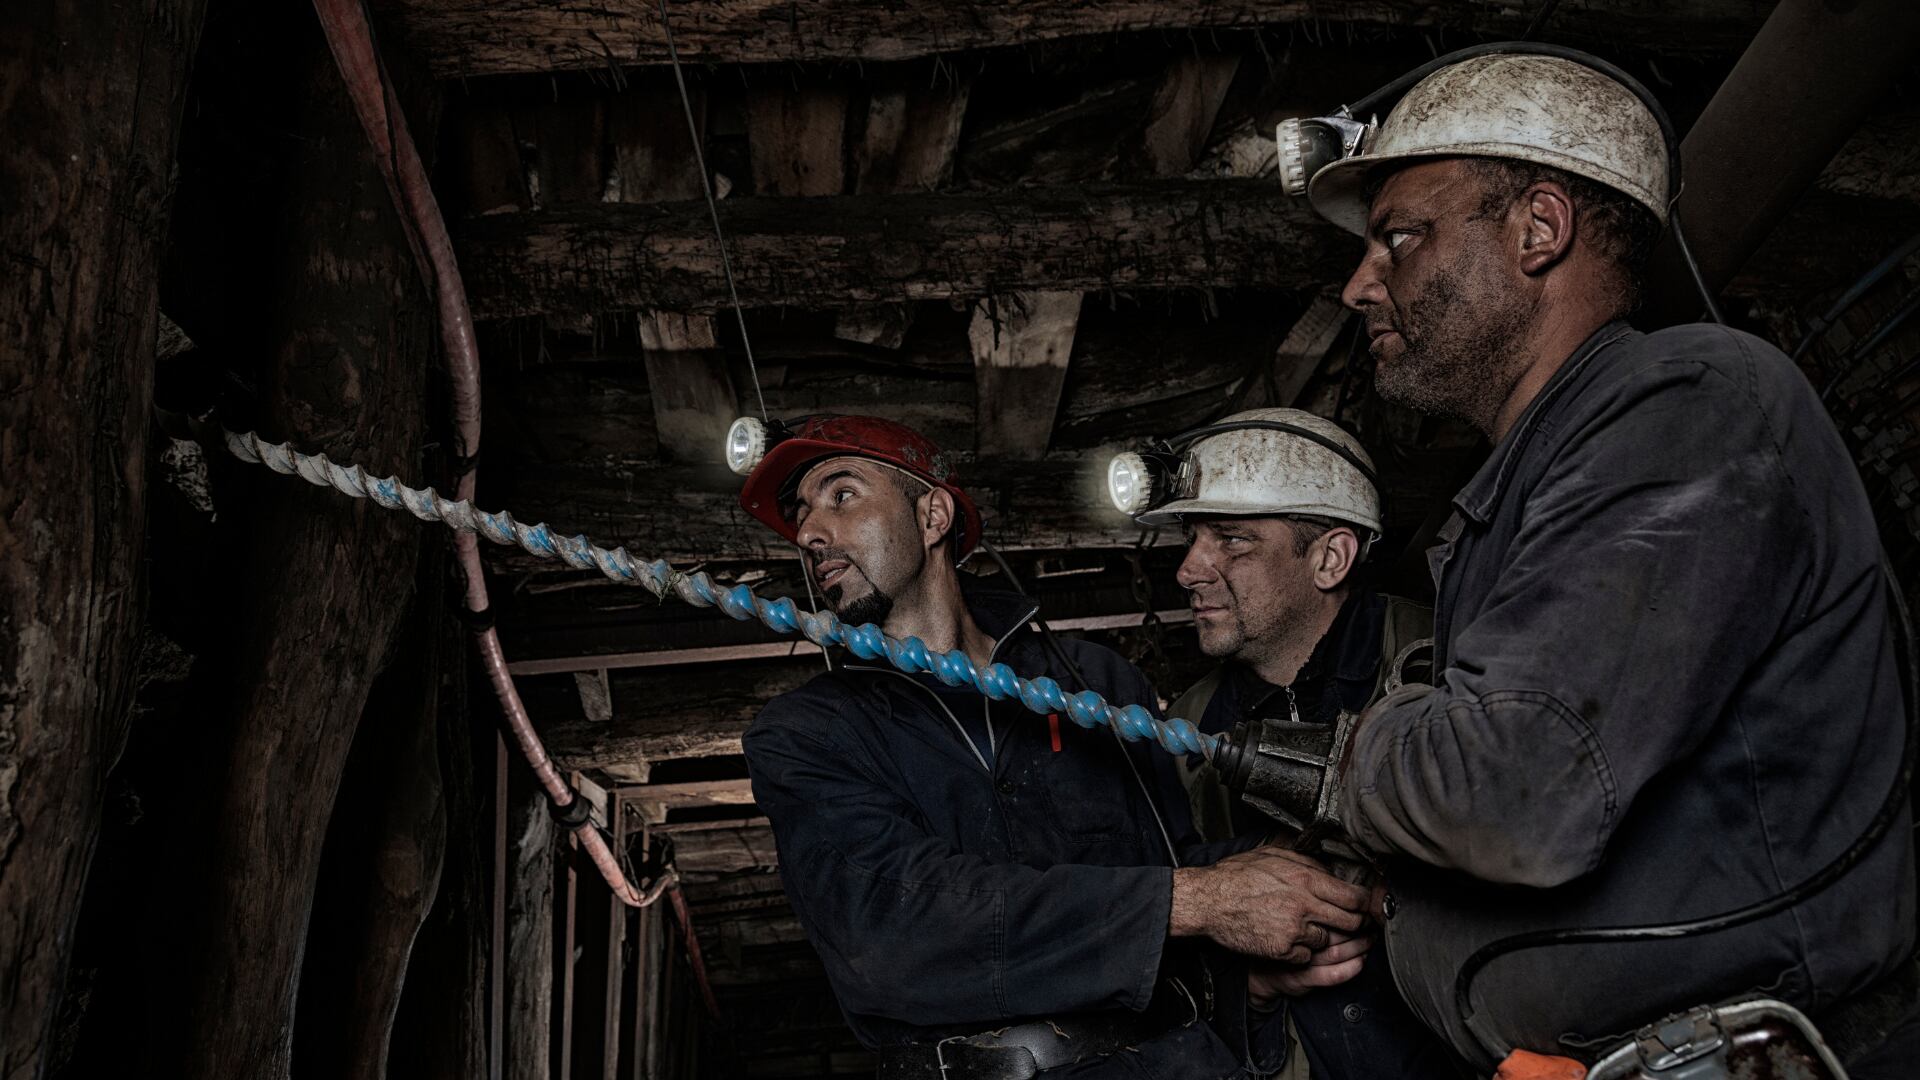 Mineros completan 17 días desaparecidos tras accidente en mina de Amagá. Canva.